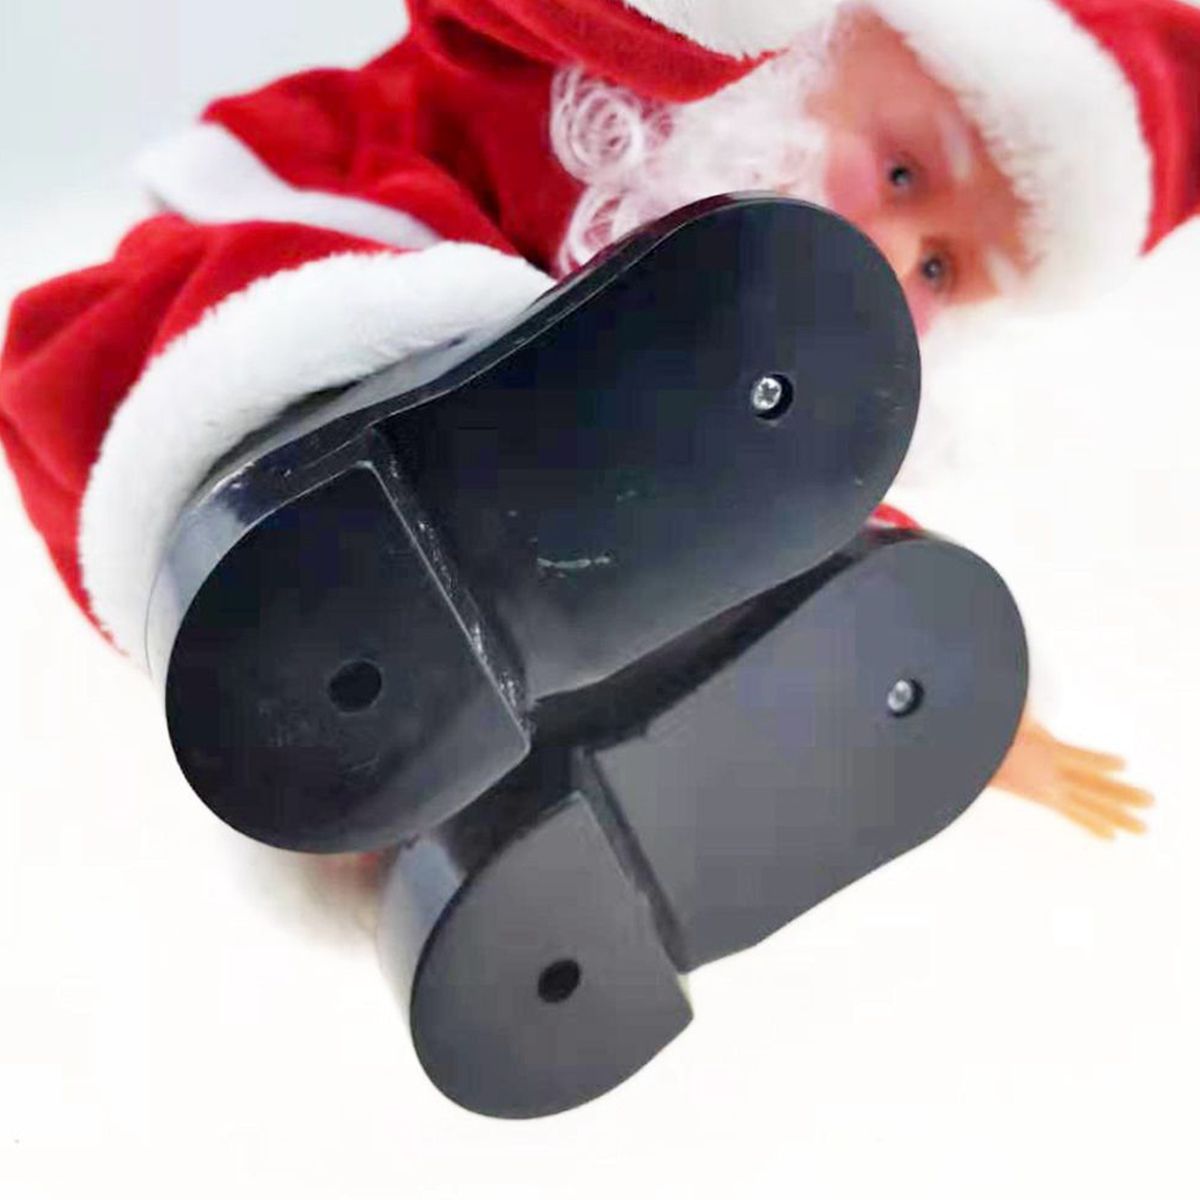 Christmas-Upside-down-Street-Dance-Somersault-Santa-Claus-Electric-Jingle-Bell-Music-Toys-Christmas--1746813